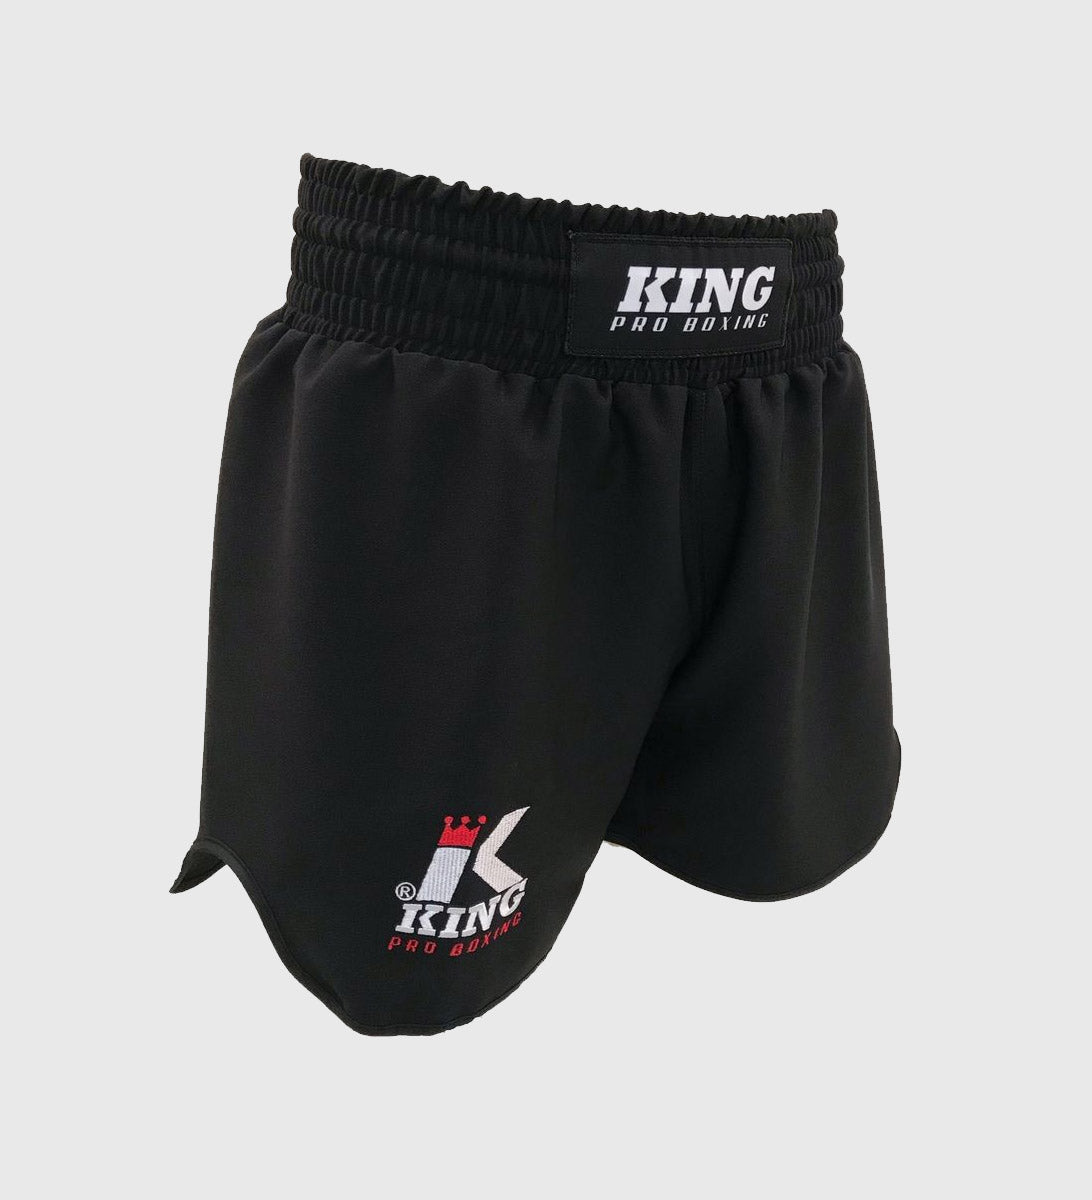 King Pro Boxing MMA Broekje Stormking - Zwart